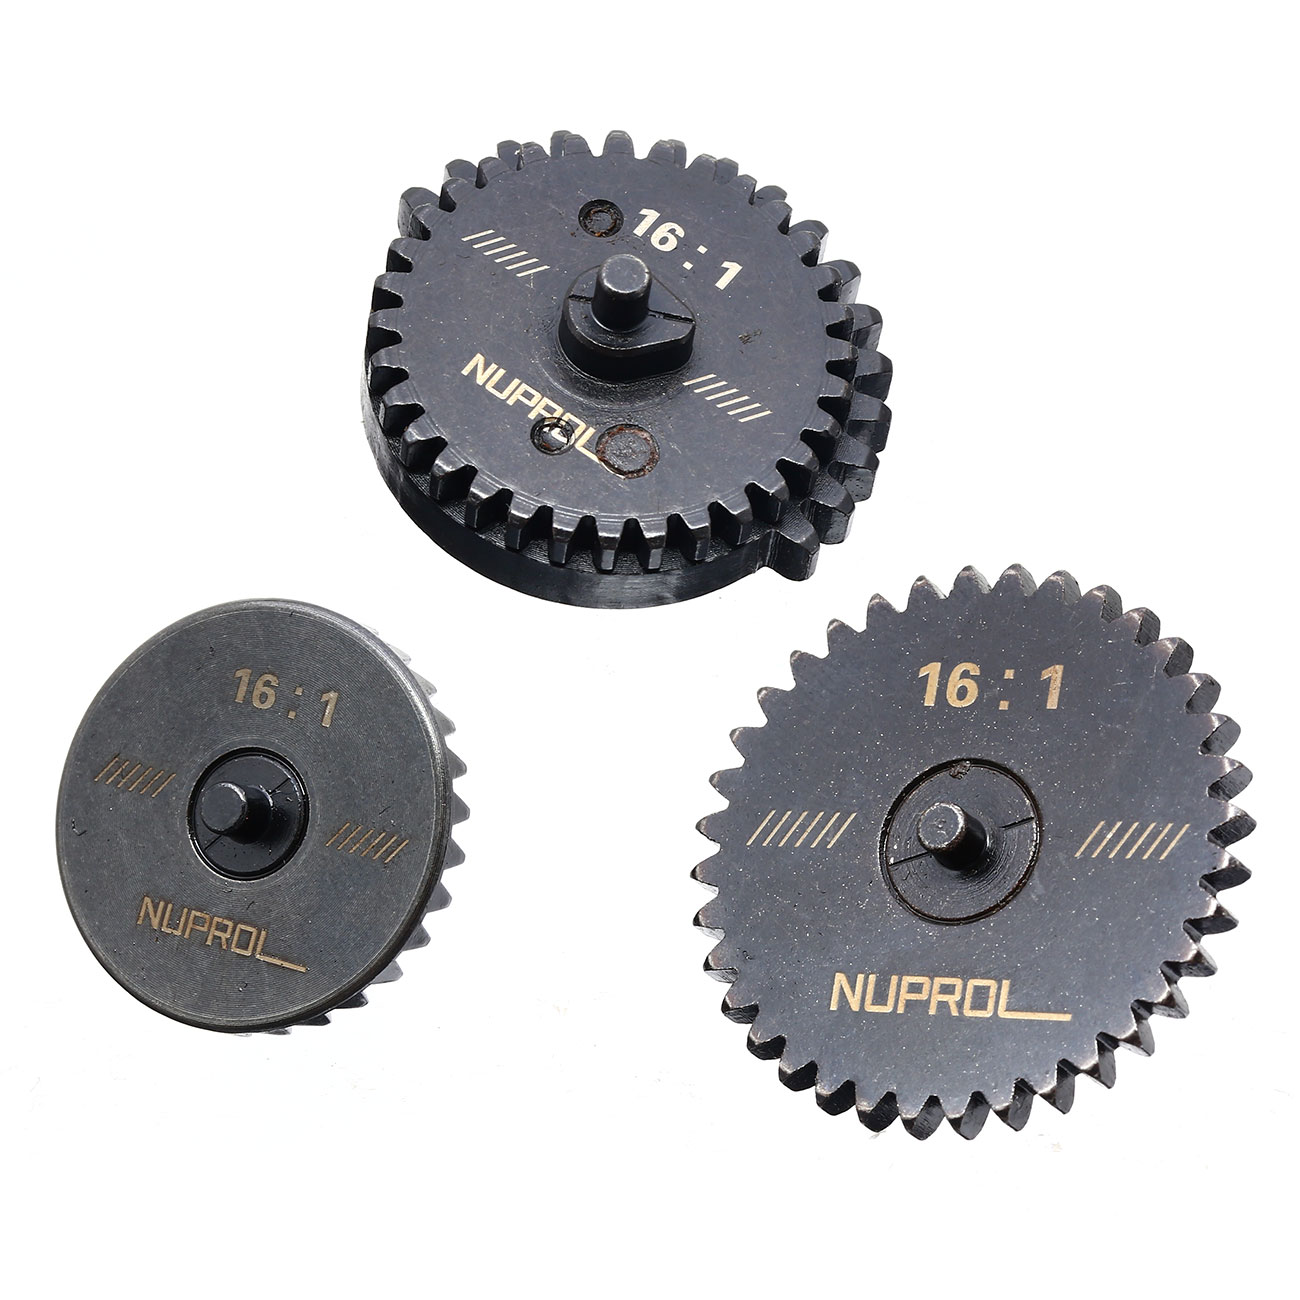 Nuprol Stahl Gear Set - 16:1 Speed Ausfhrung Bild 1